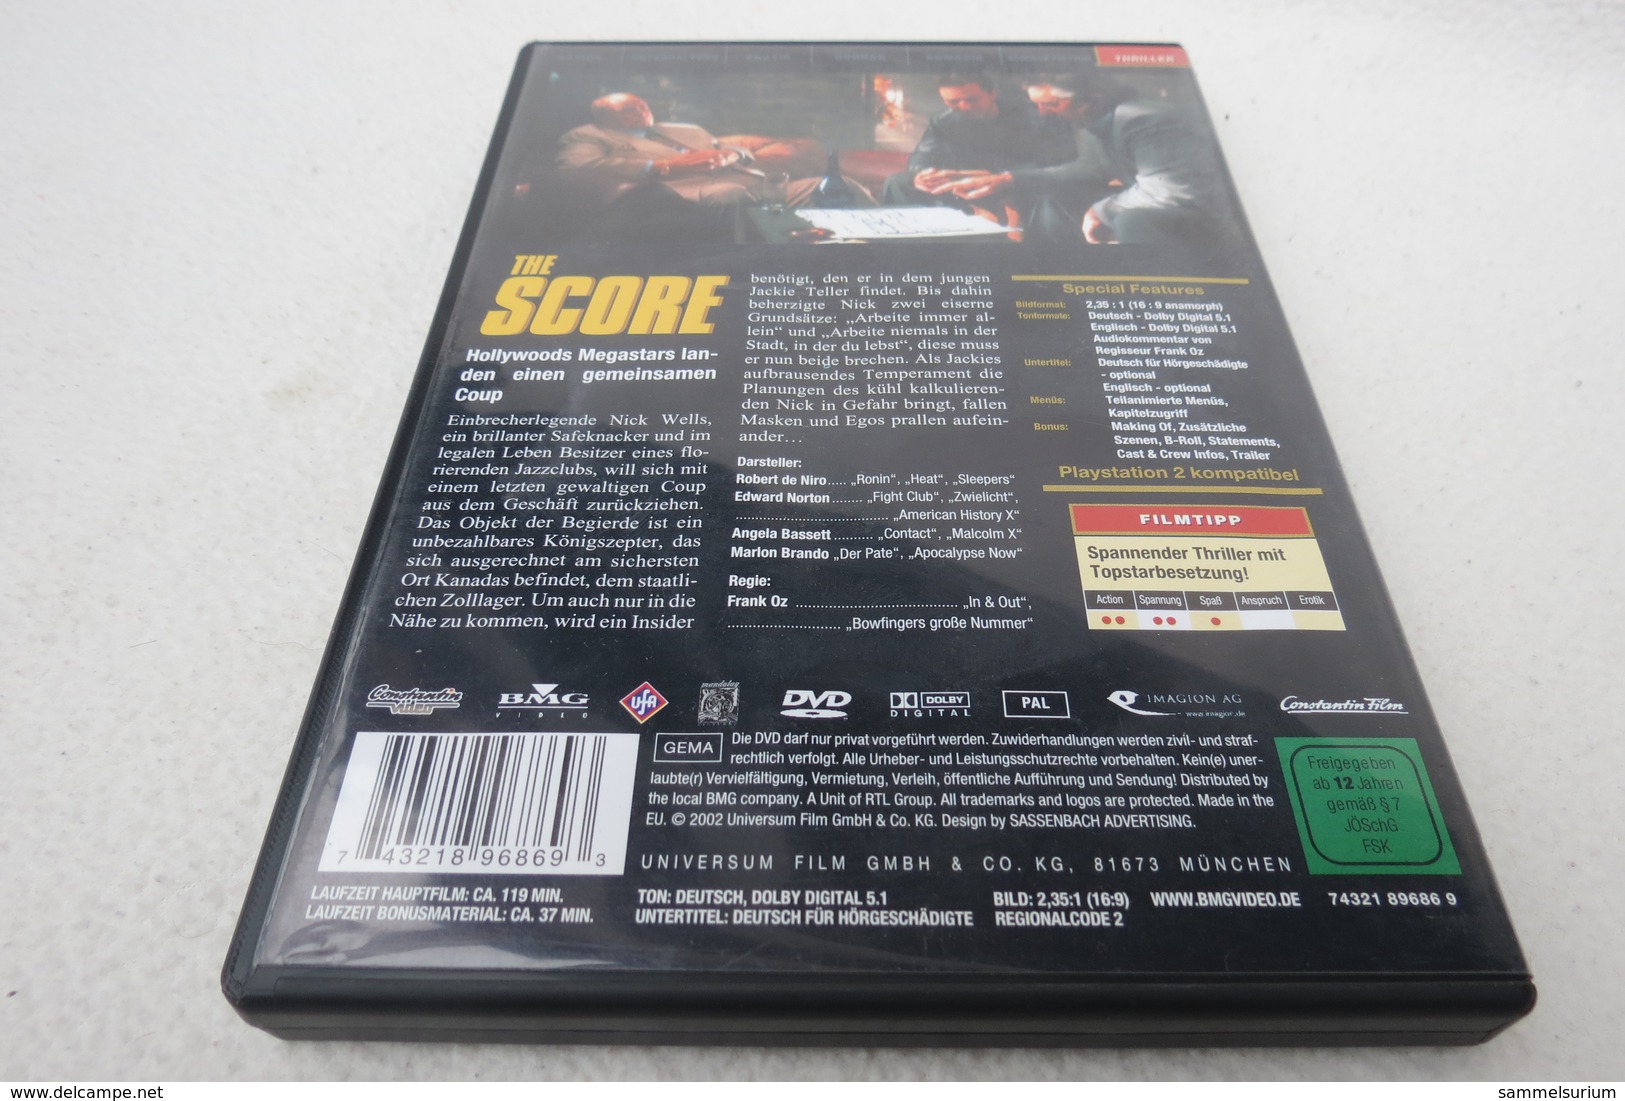 DVD "The Score" Robert De Niro, Edward Norton, Angela Bassett, Marlon Brando - Music On DVD